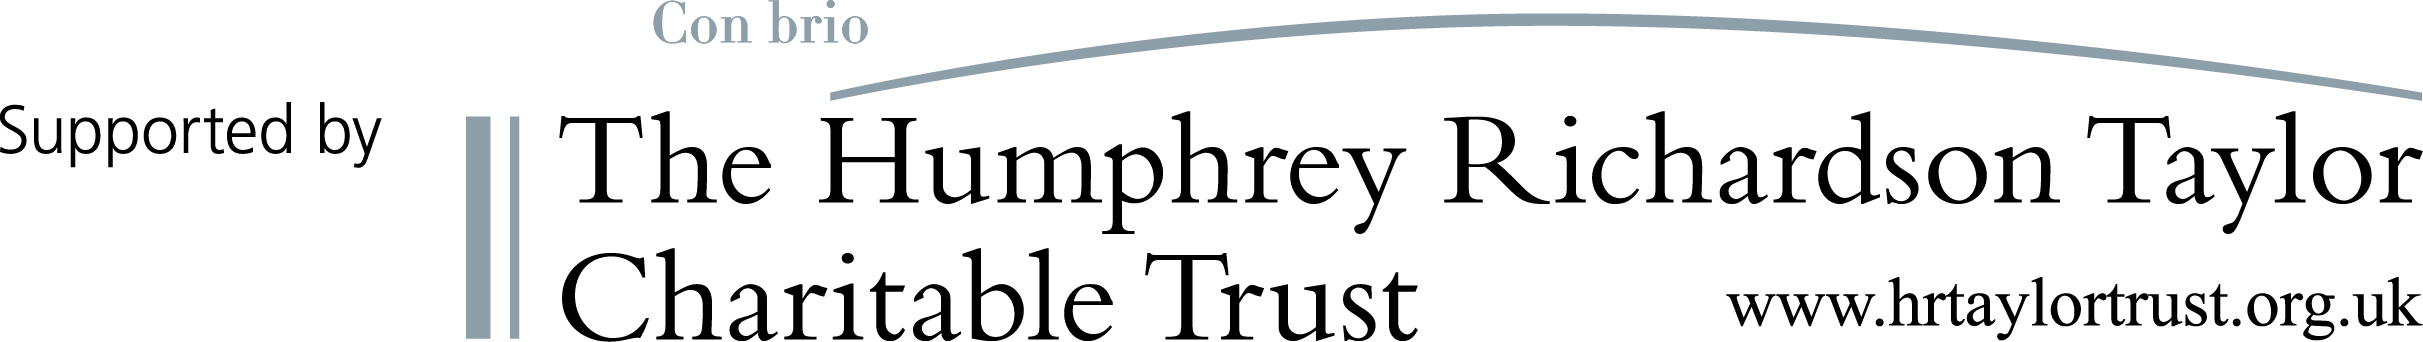 The Humphrey Richardson Taylor Charitable Trust